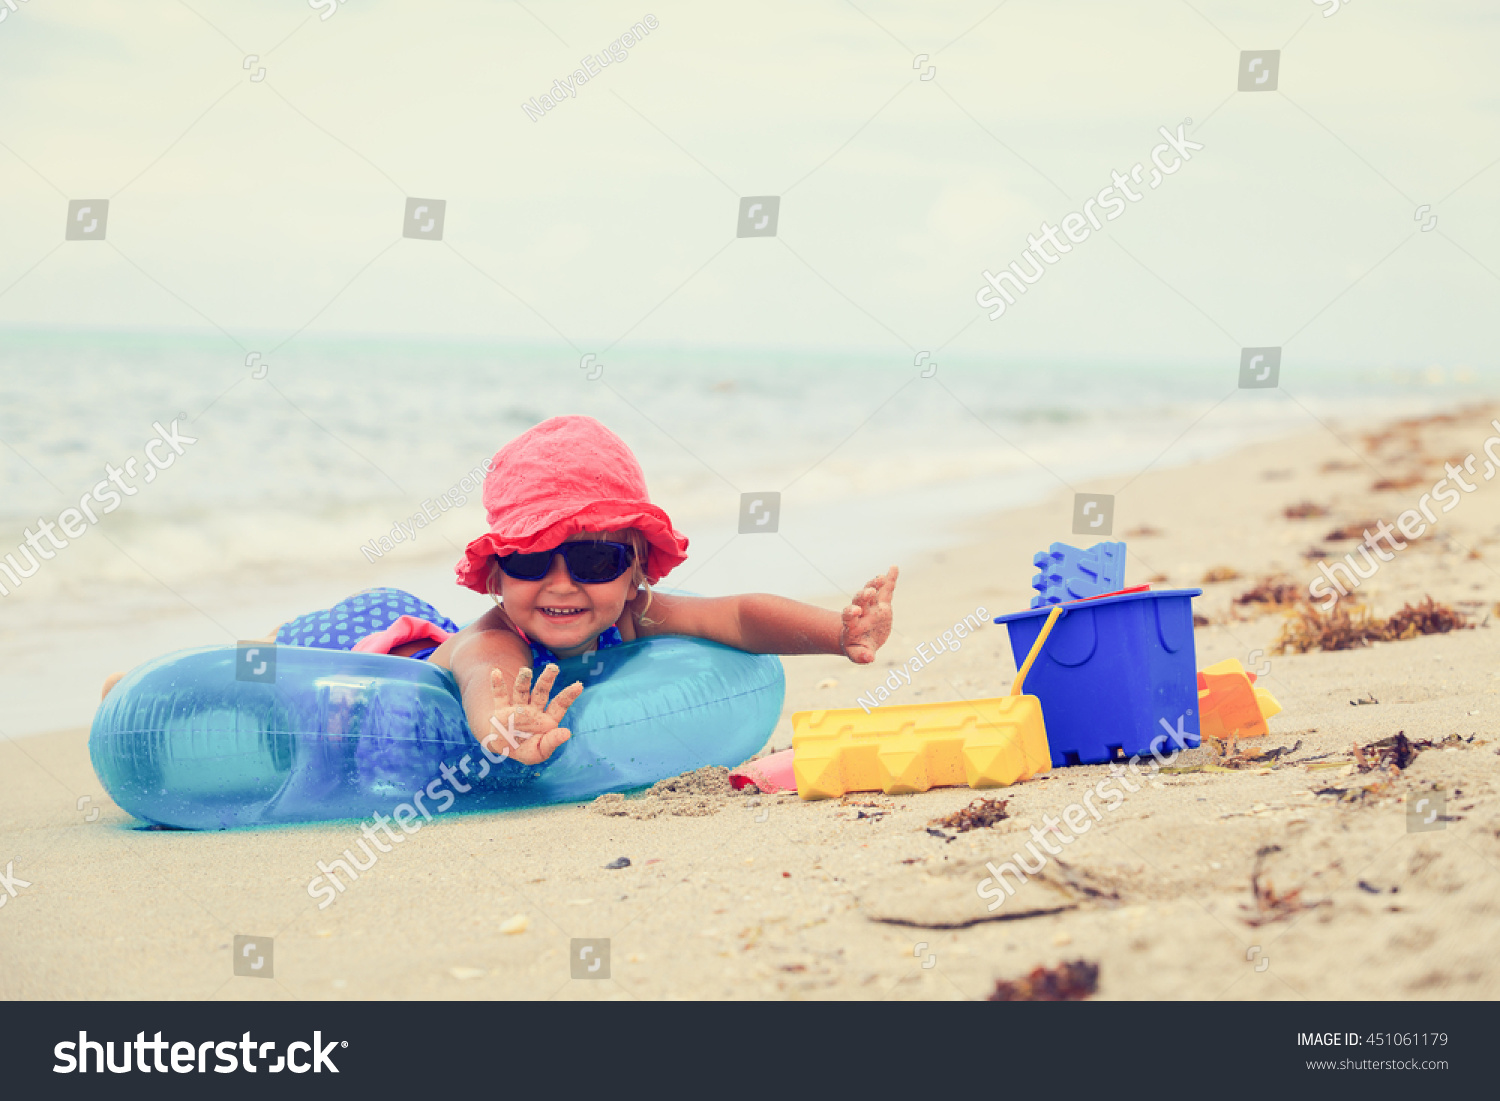 cute little girl play on summer beach #451061179